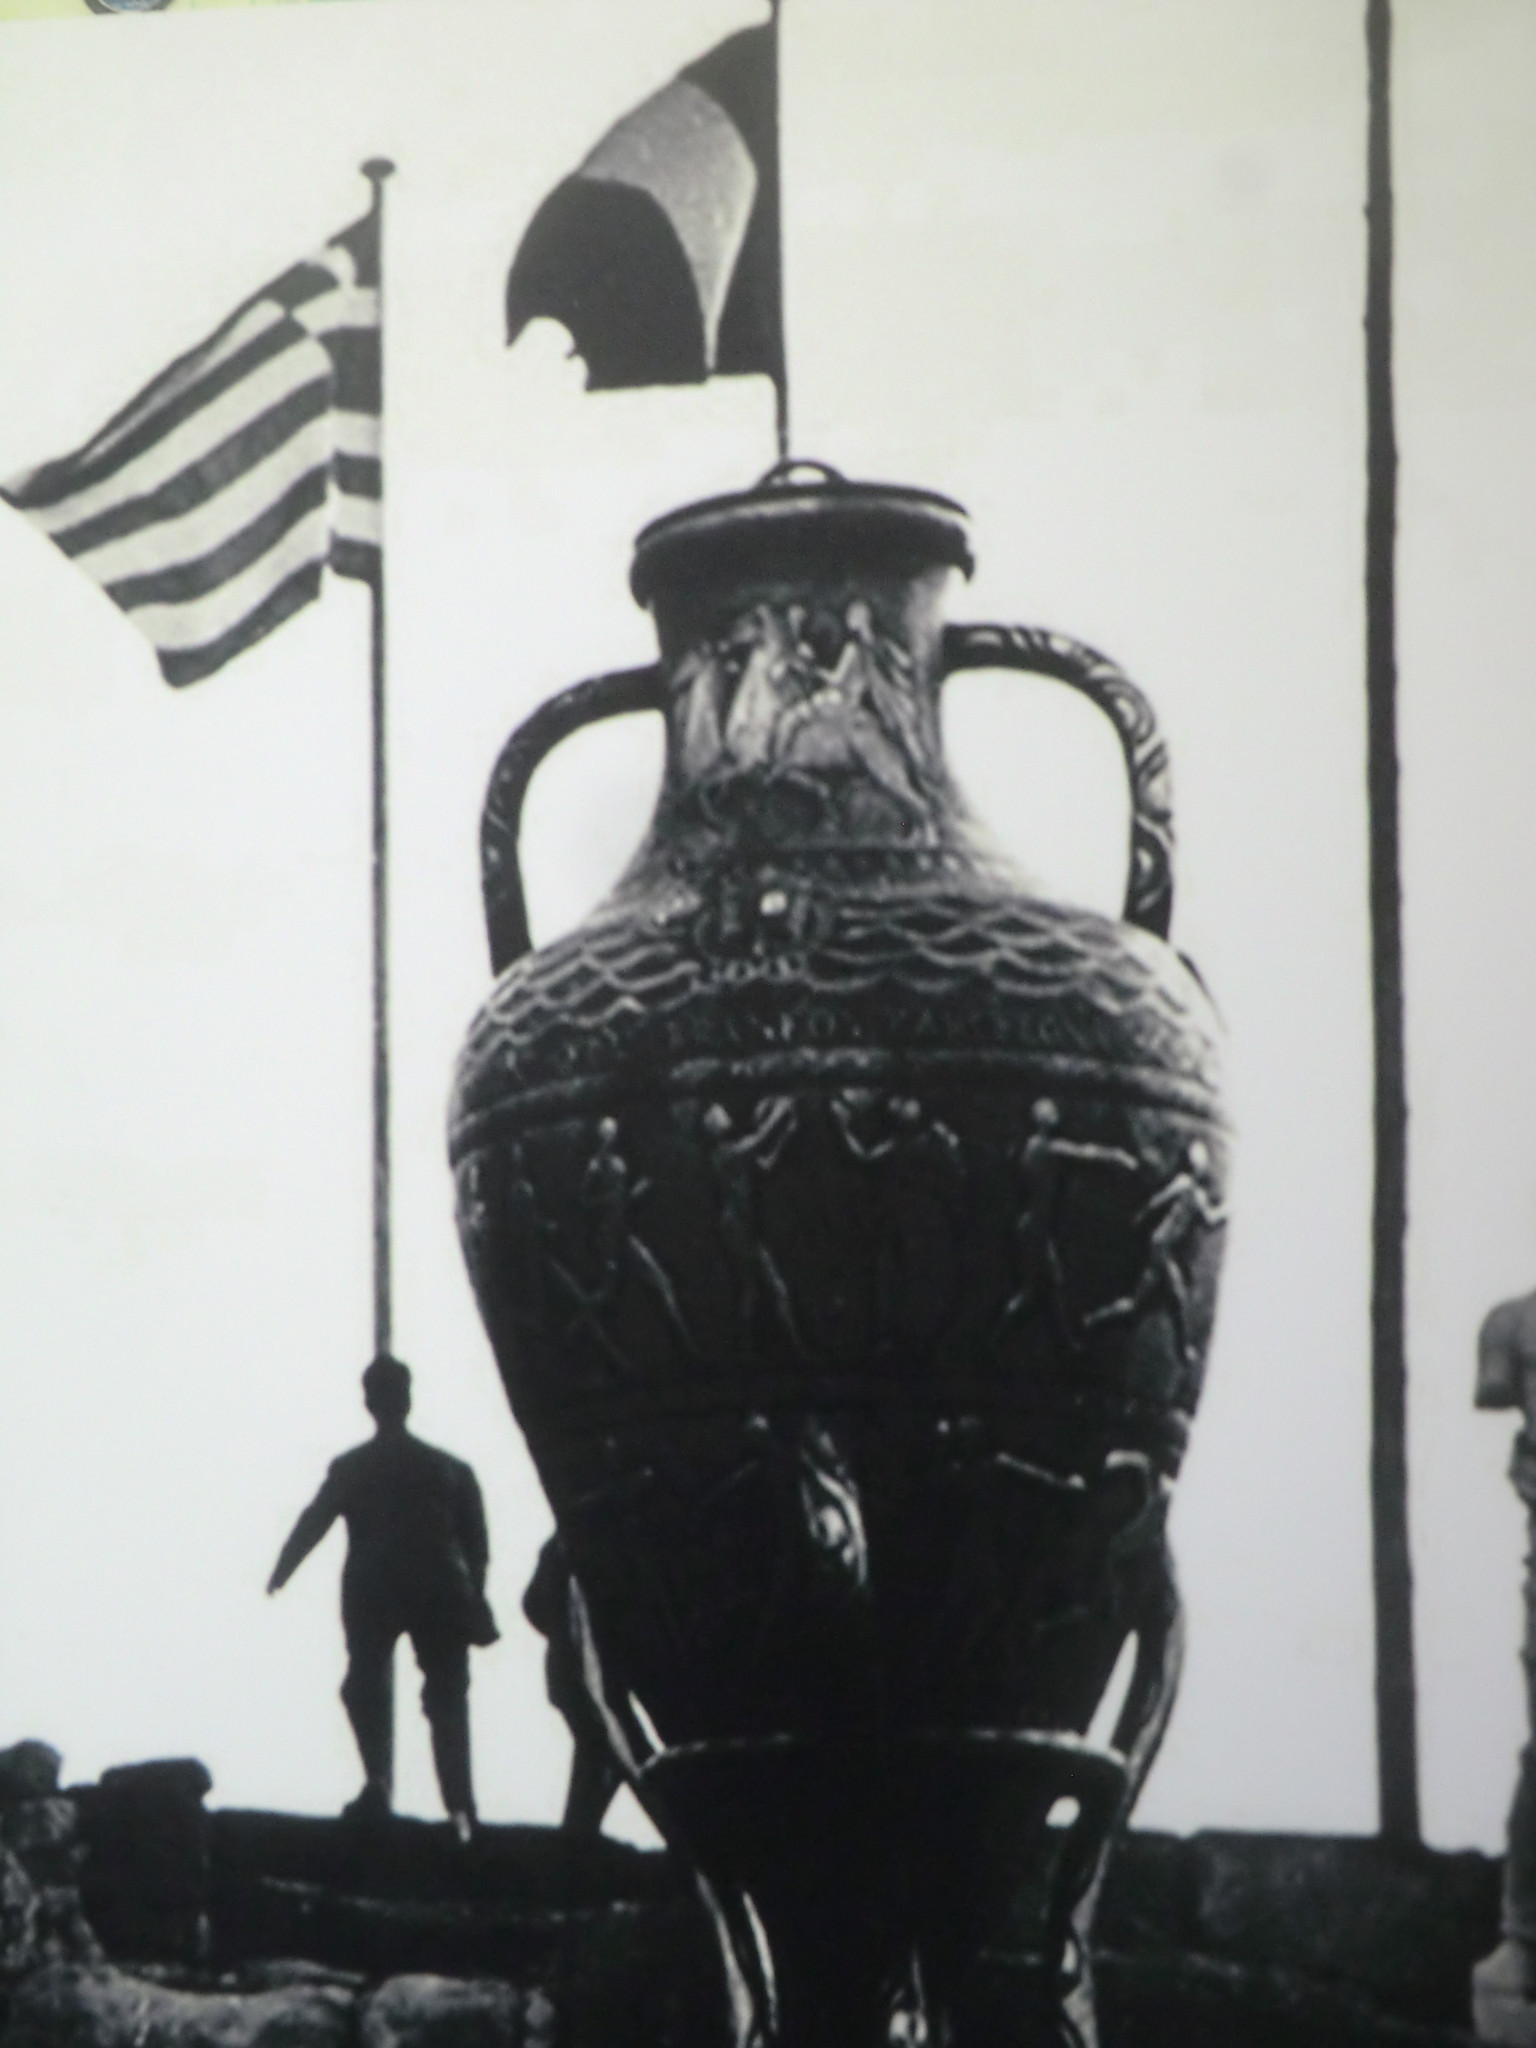 The amphora at the 1955 Mediterranean Games ©Fundación Barcelona Olímpica